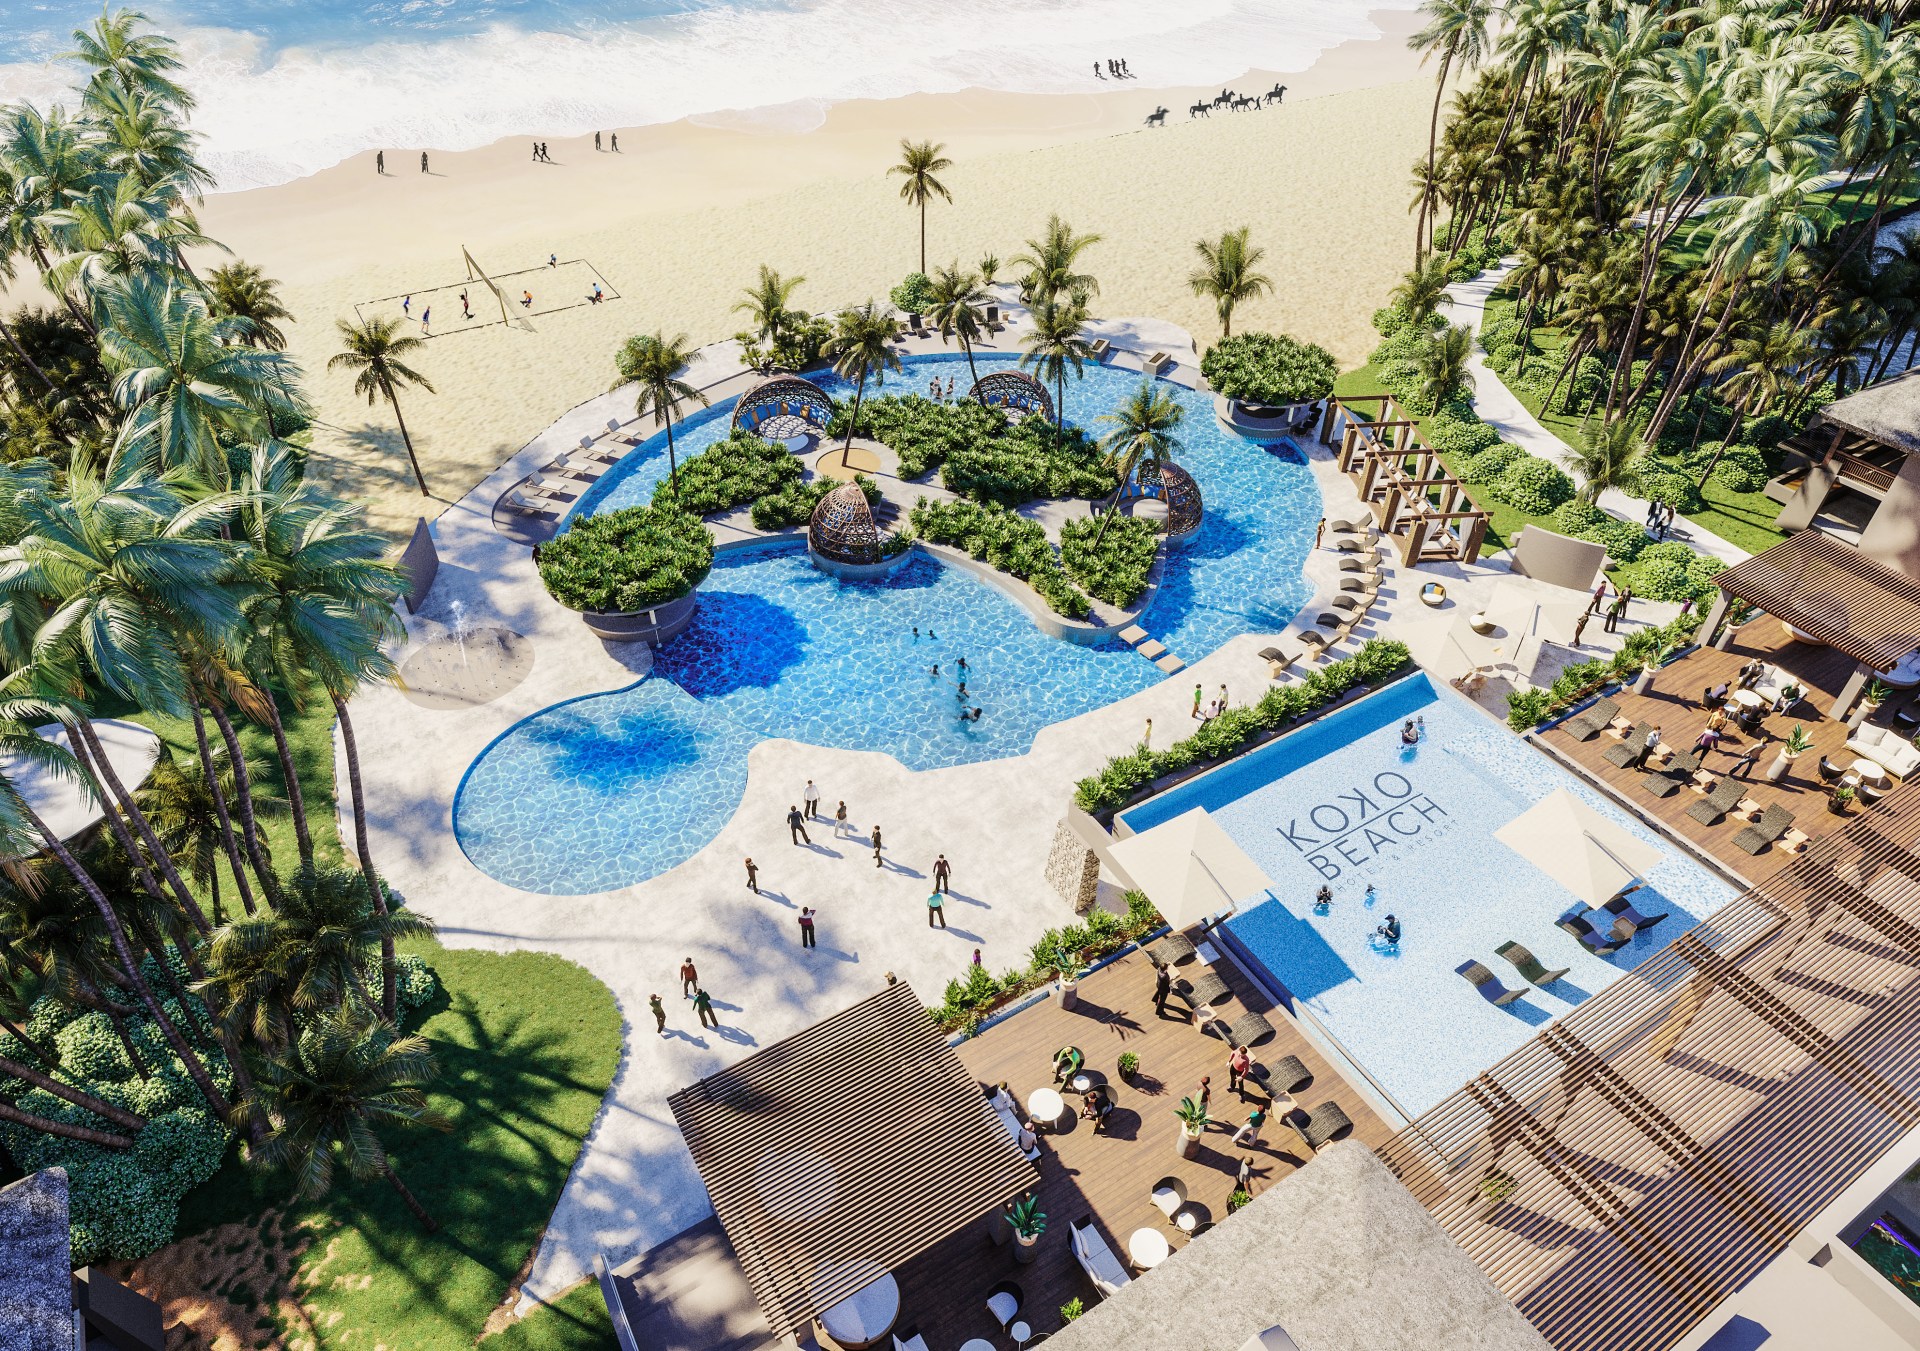 Koko Beach Resort Ilashe Lagos, Curio Collection by Hilton - Rendering